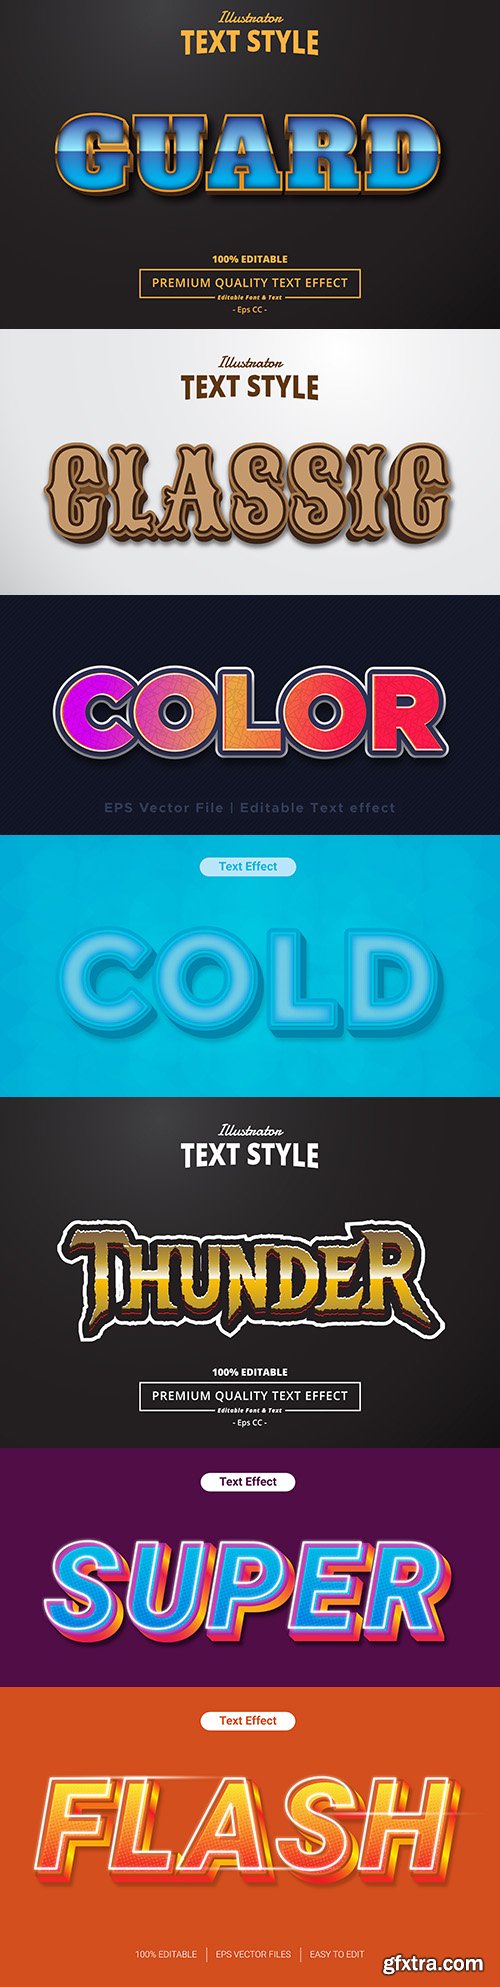 Editable font effect text collection illustration design 90